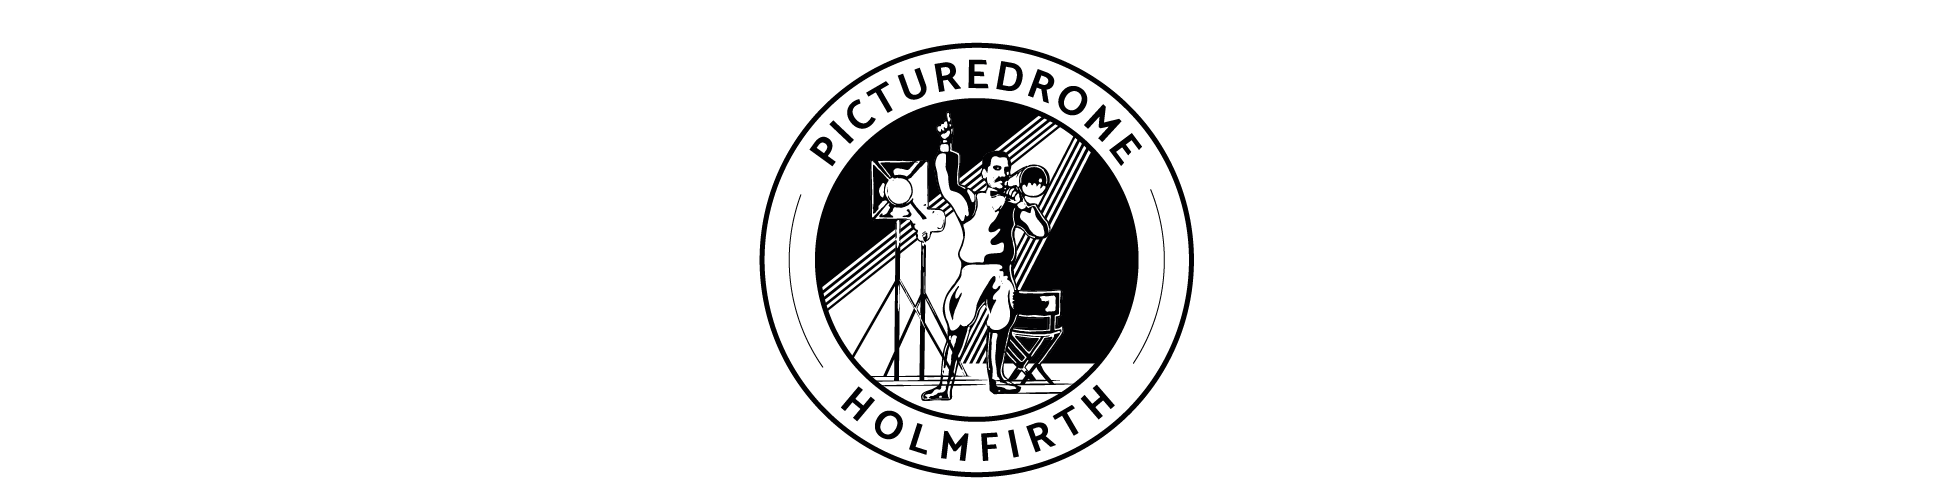 Picturedrome Holmfirth